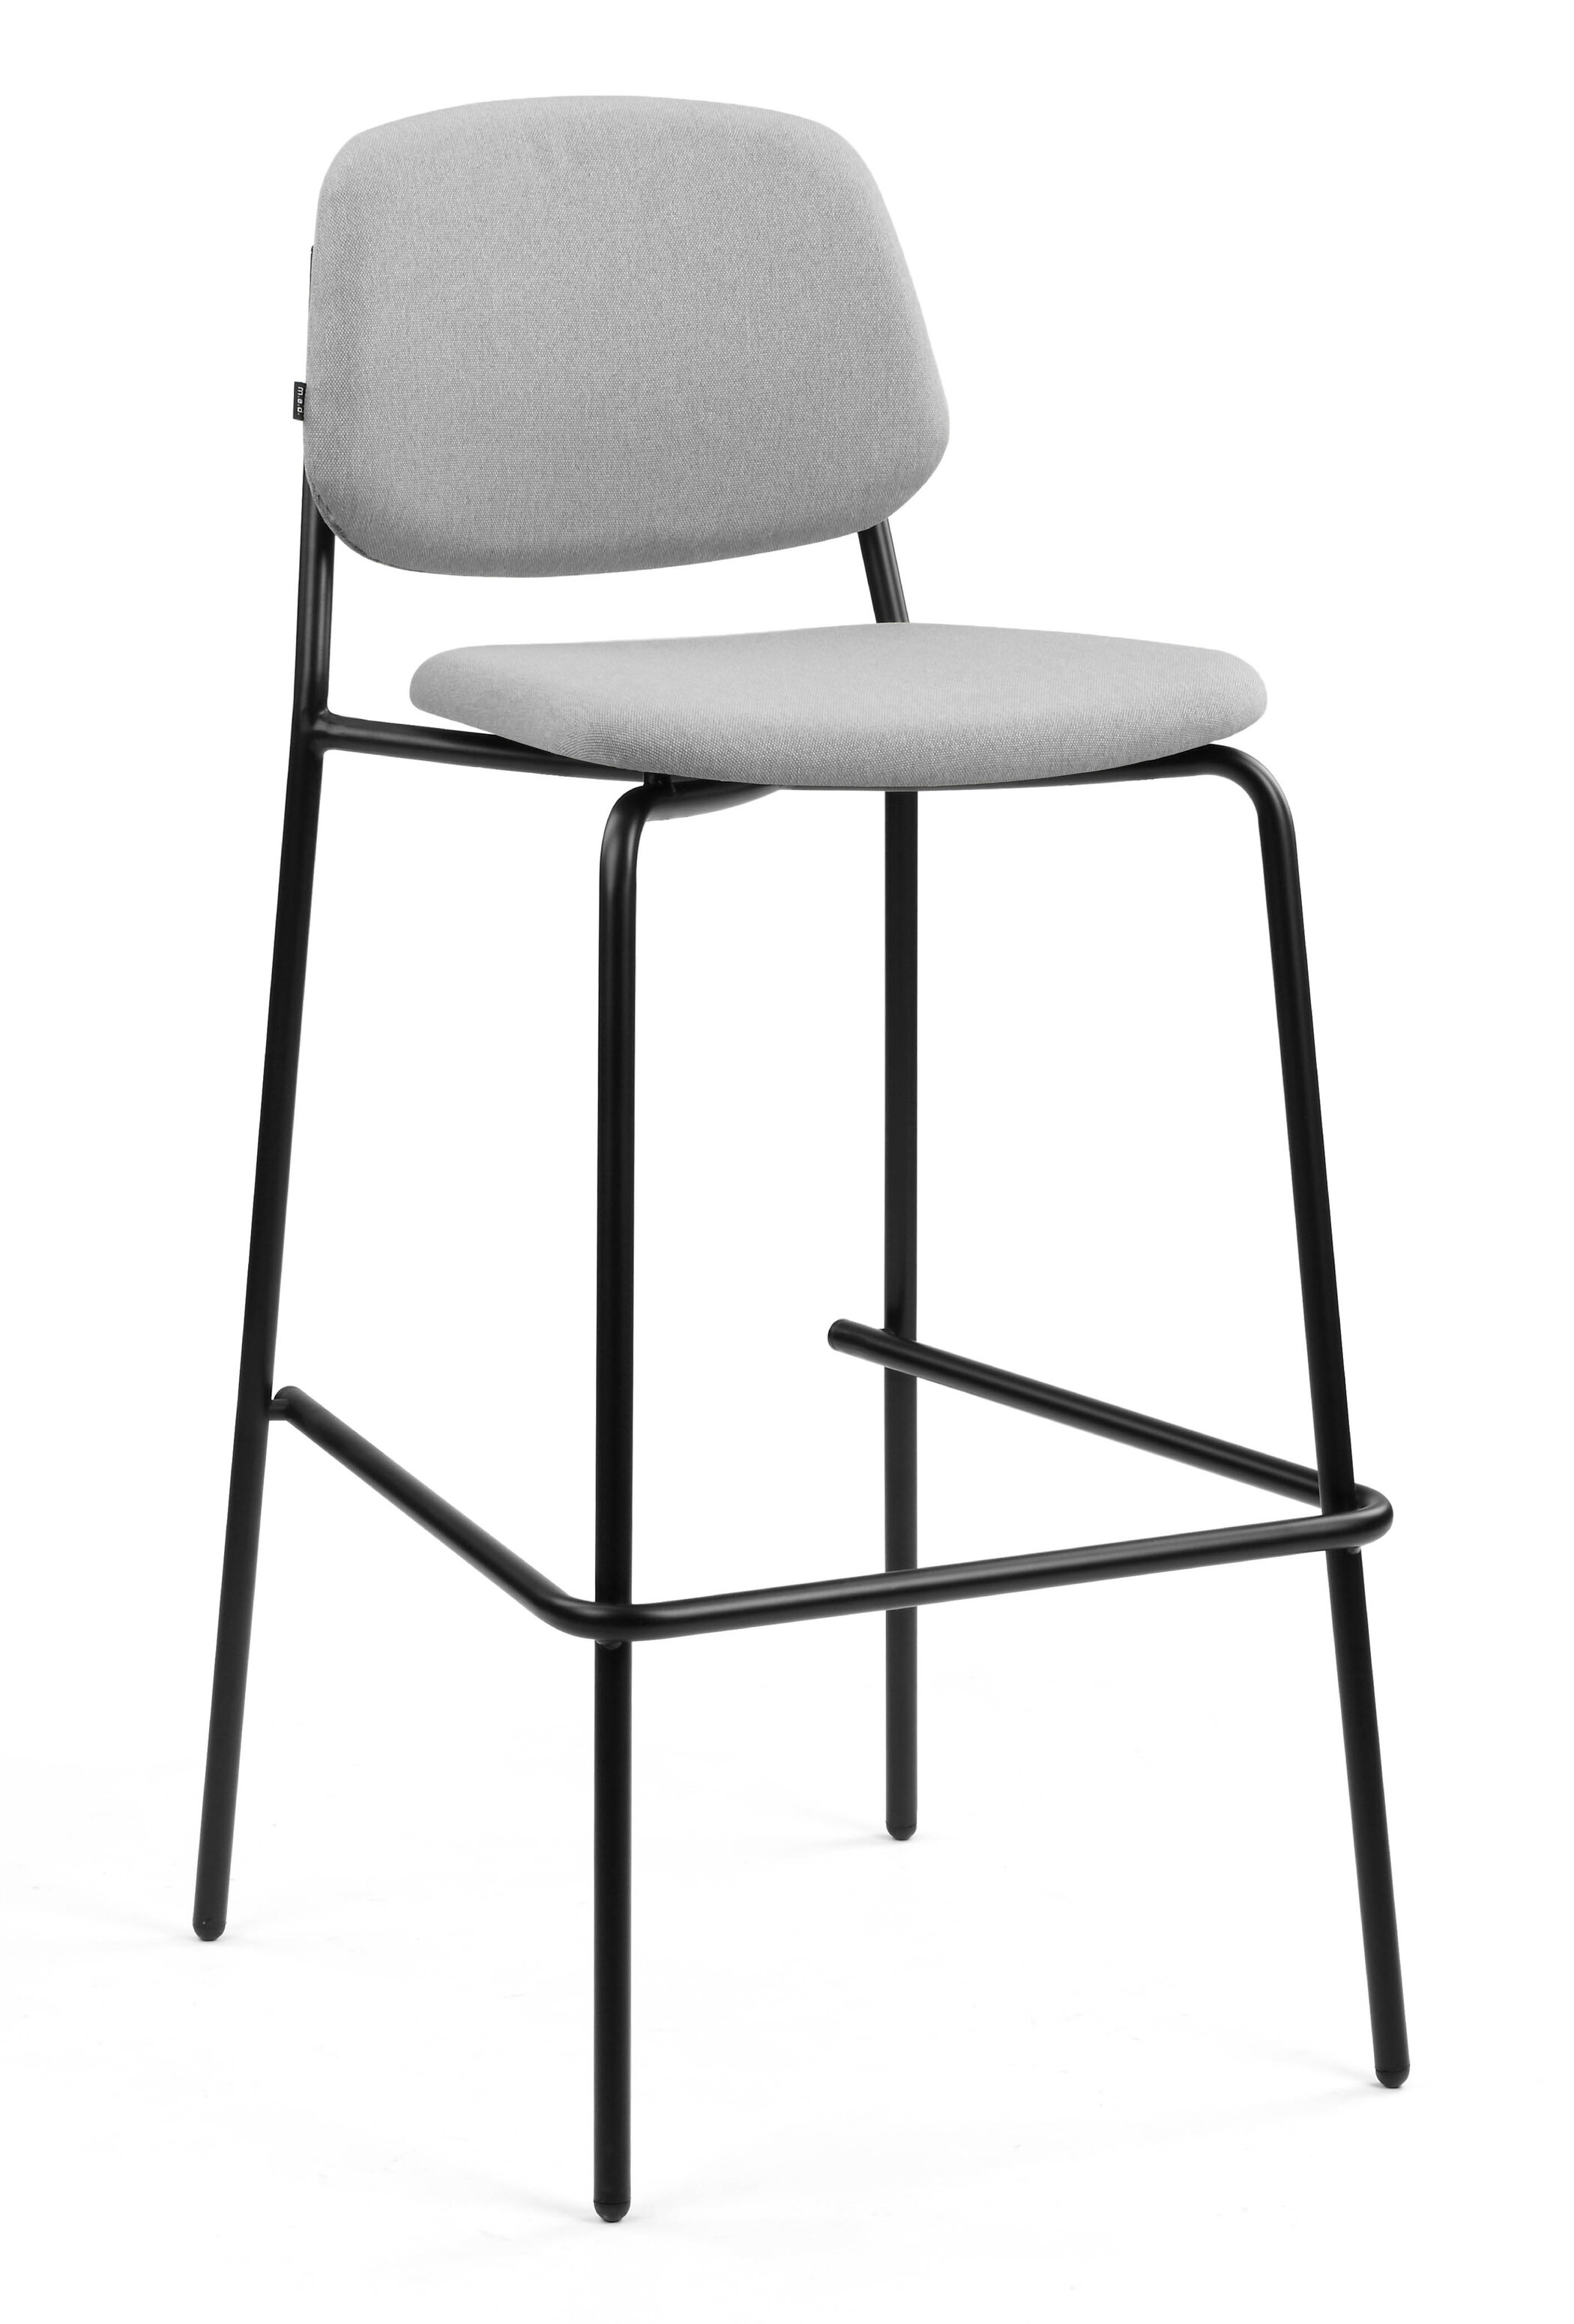 WS - Platform high stool - ERA CSE46 MEMO